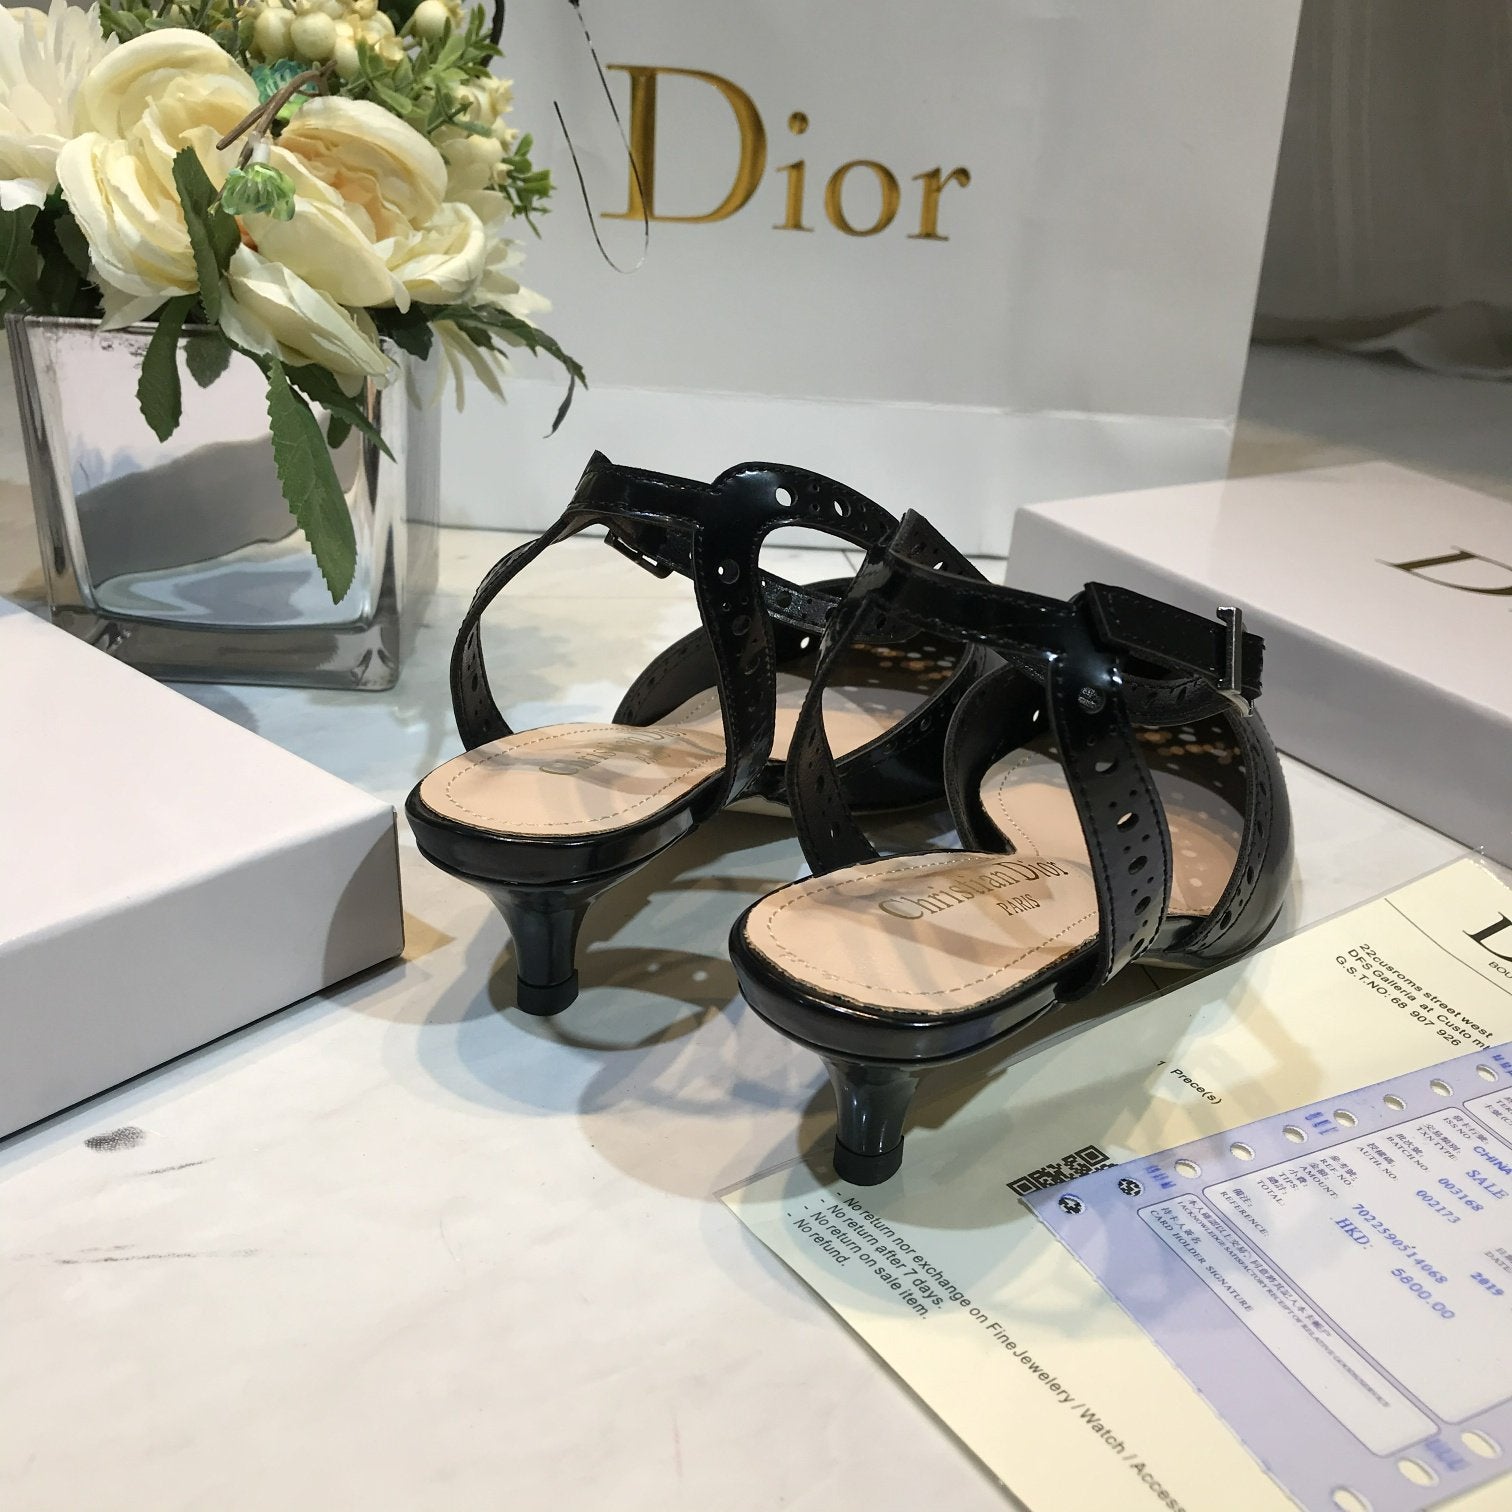 Dior CD new shoes fashion ladies high heels sandals